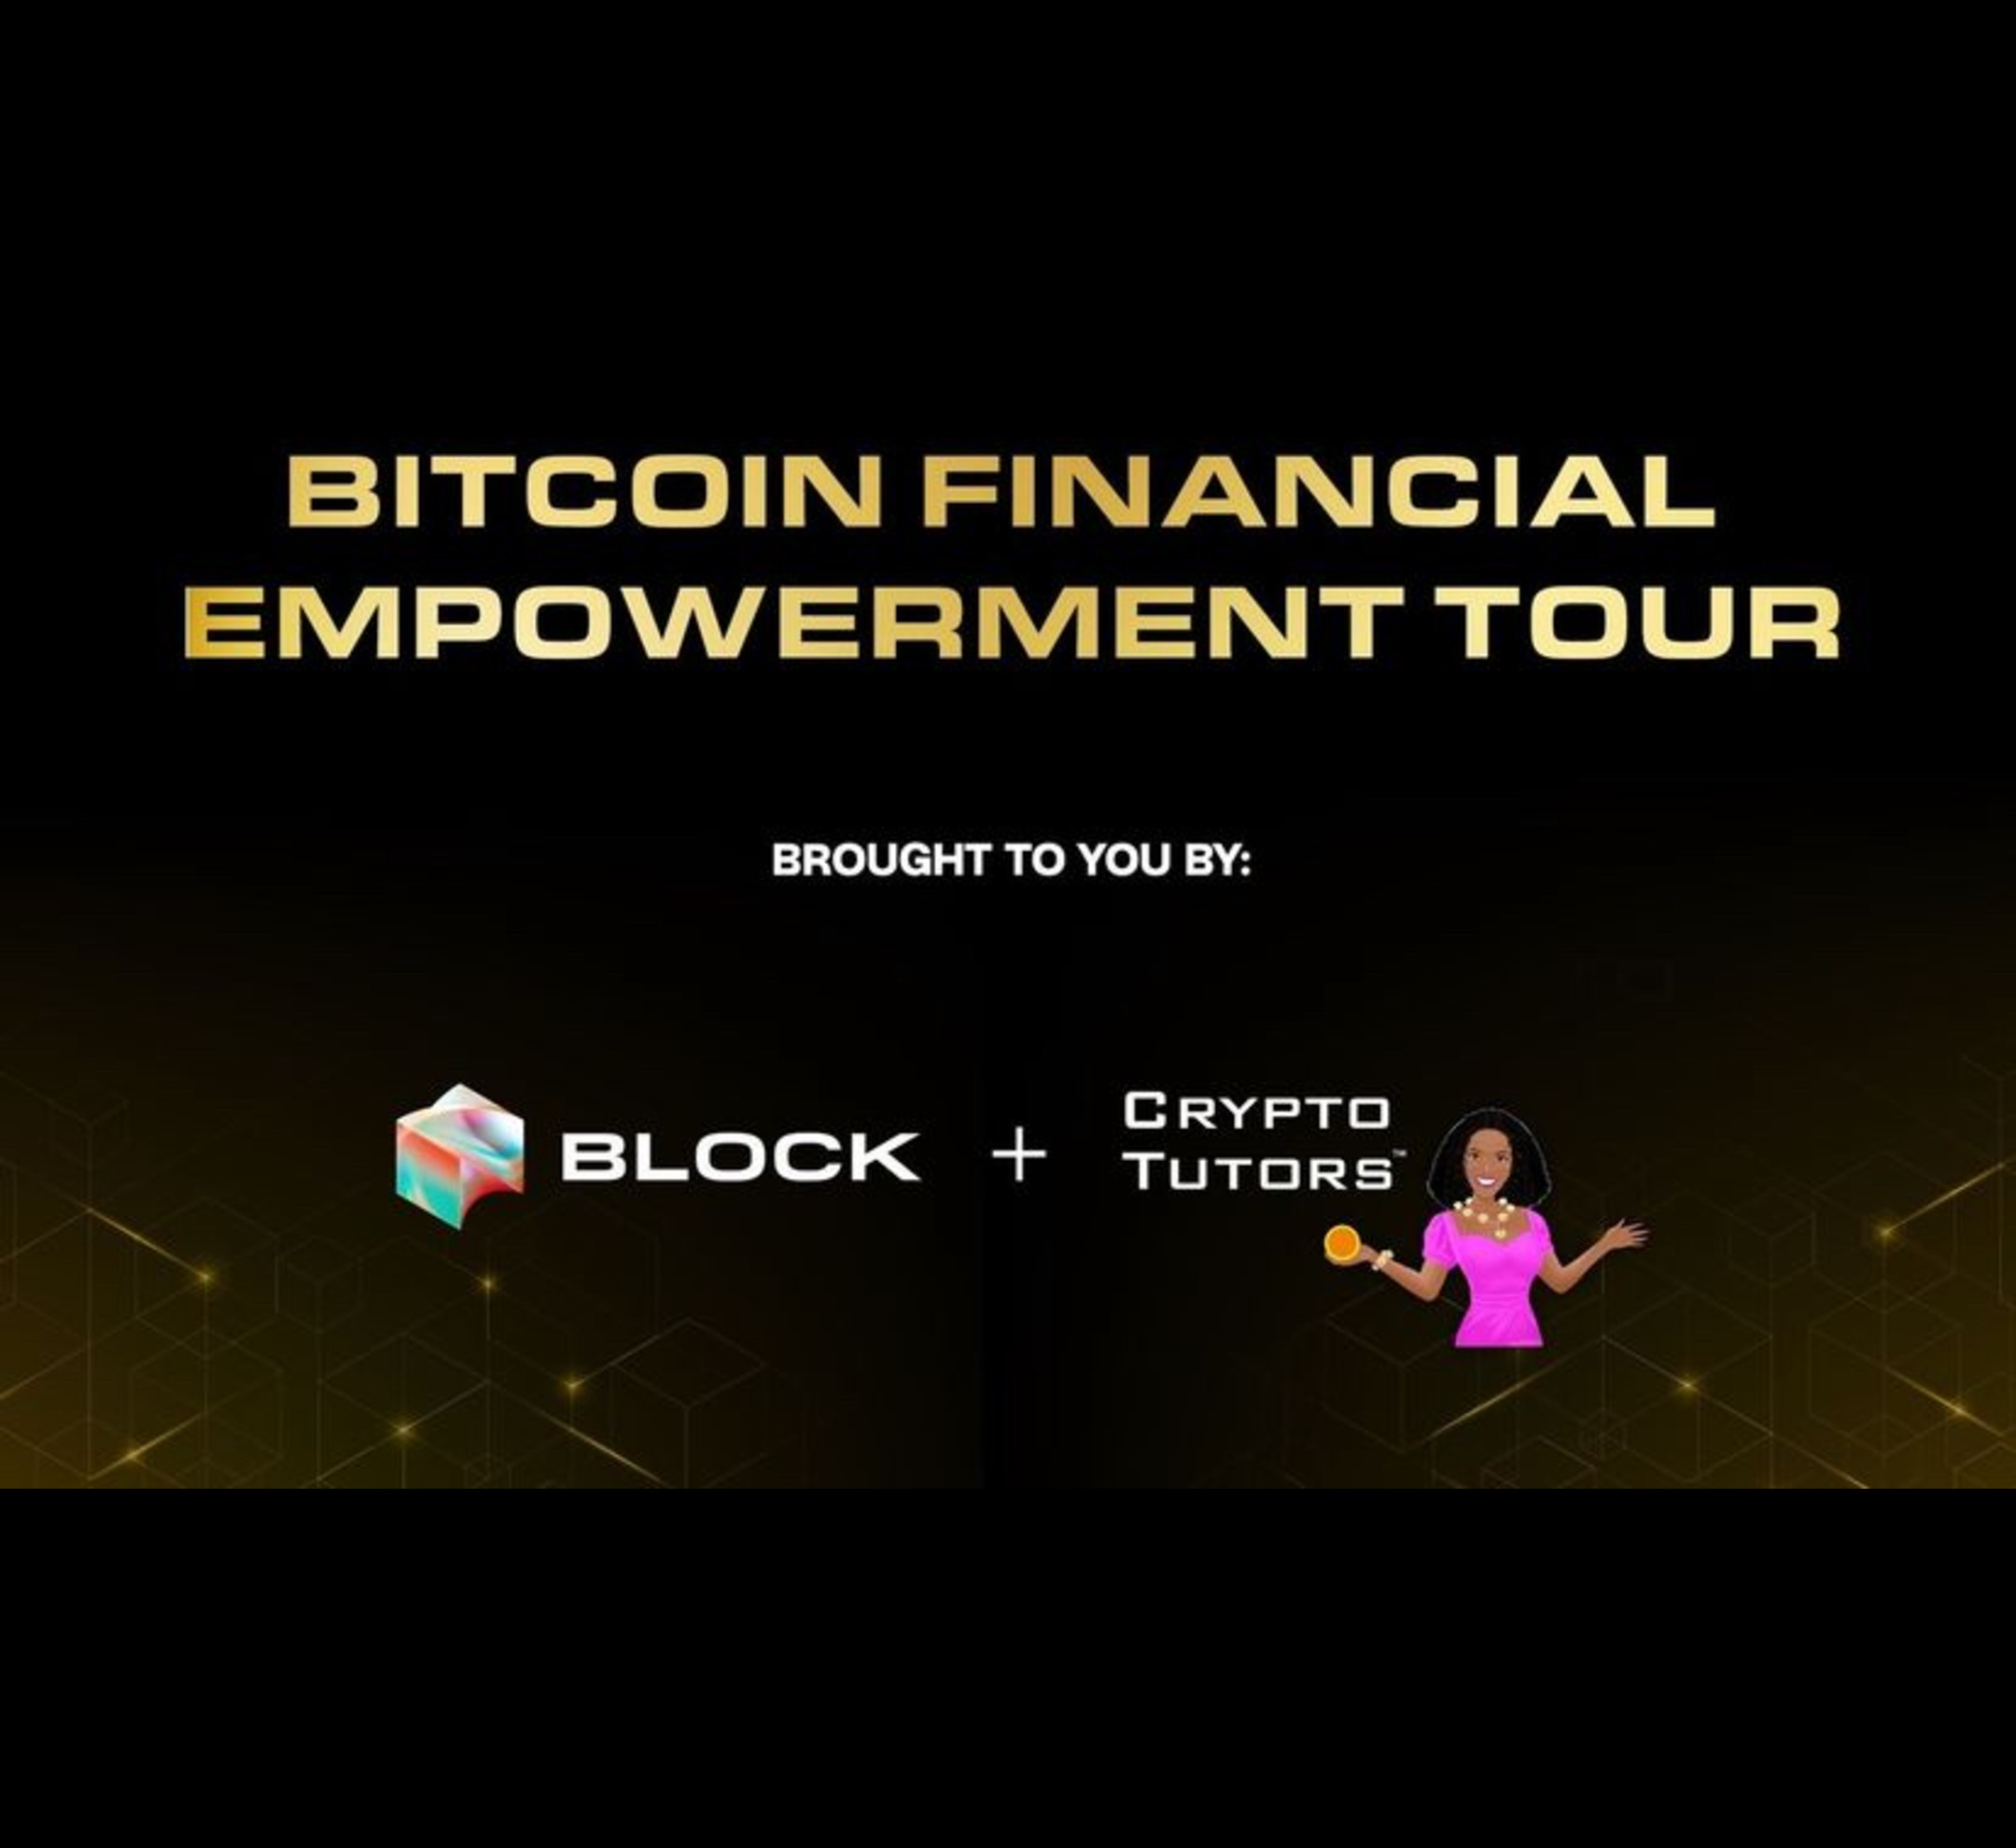 Crypto Tutors: Bitcoin Financial Empowerment Tour